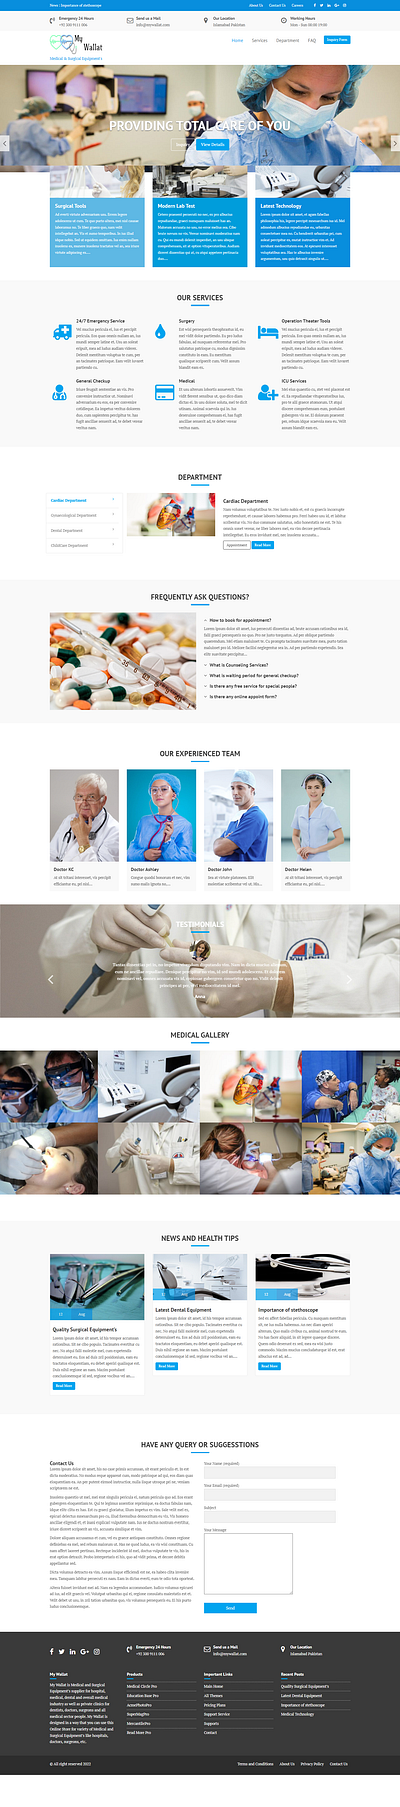 my wallat surgical equipment's website